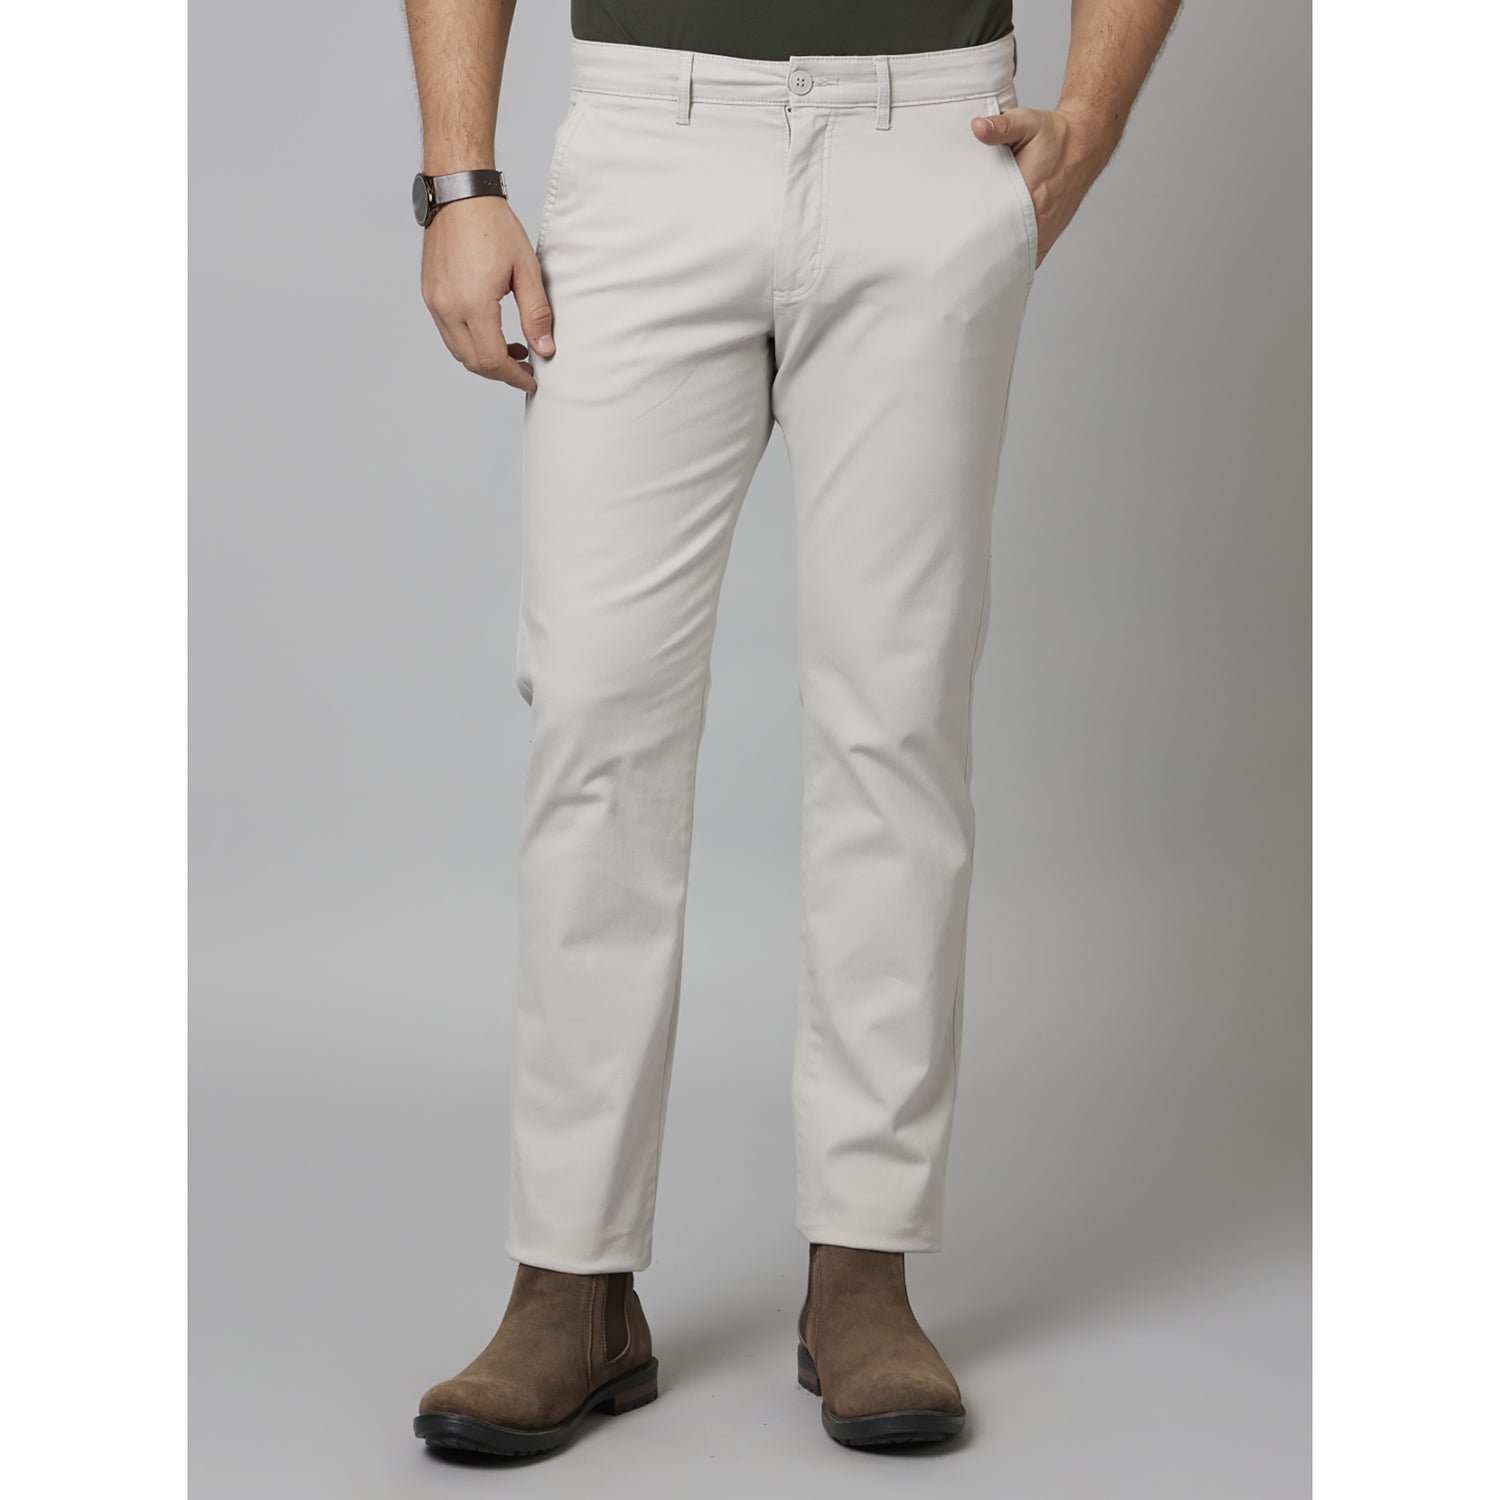 Light Grey Solid Cotton Blend Trousers (TOHENRI)